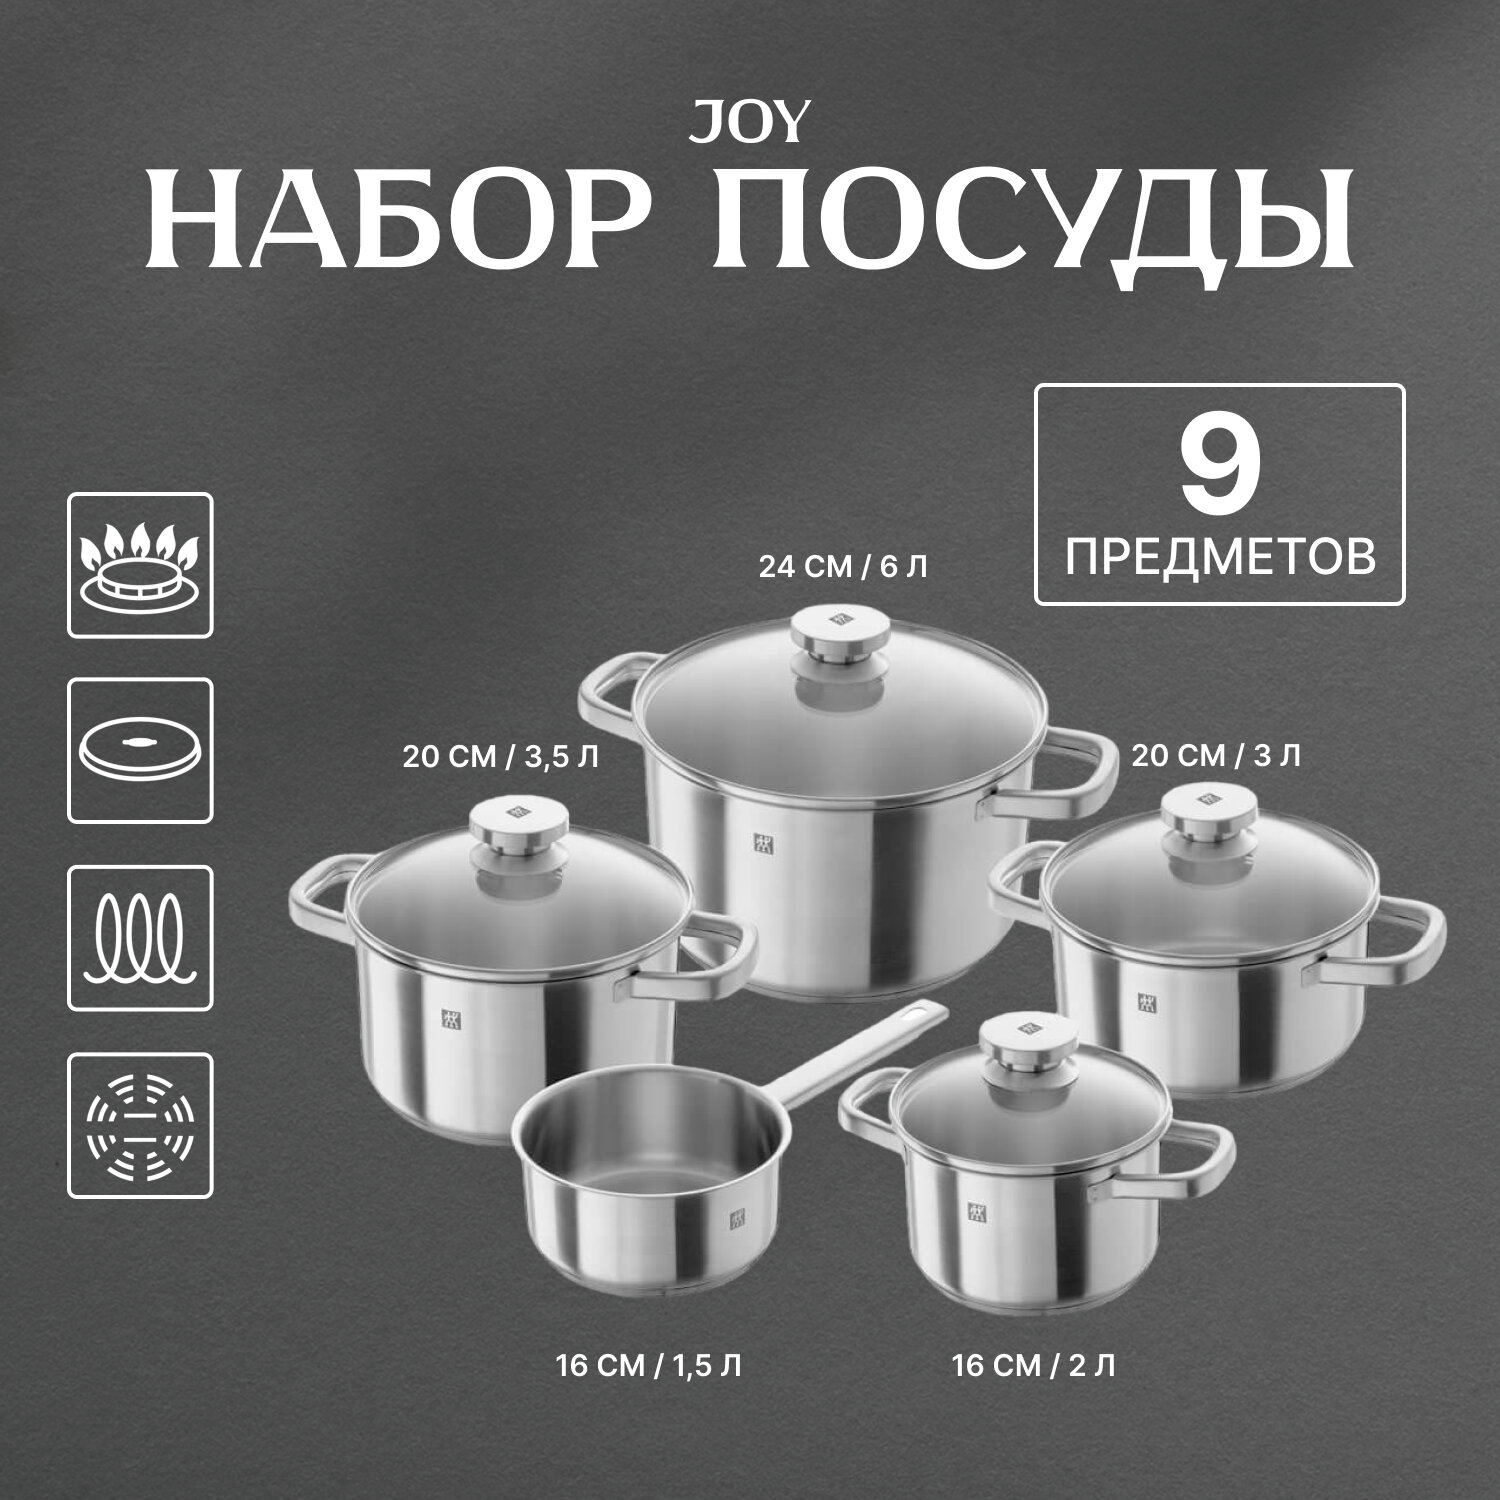 Набор посуды ZWILLING Joy 64040-006 9 пр. серебристый